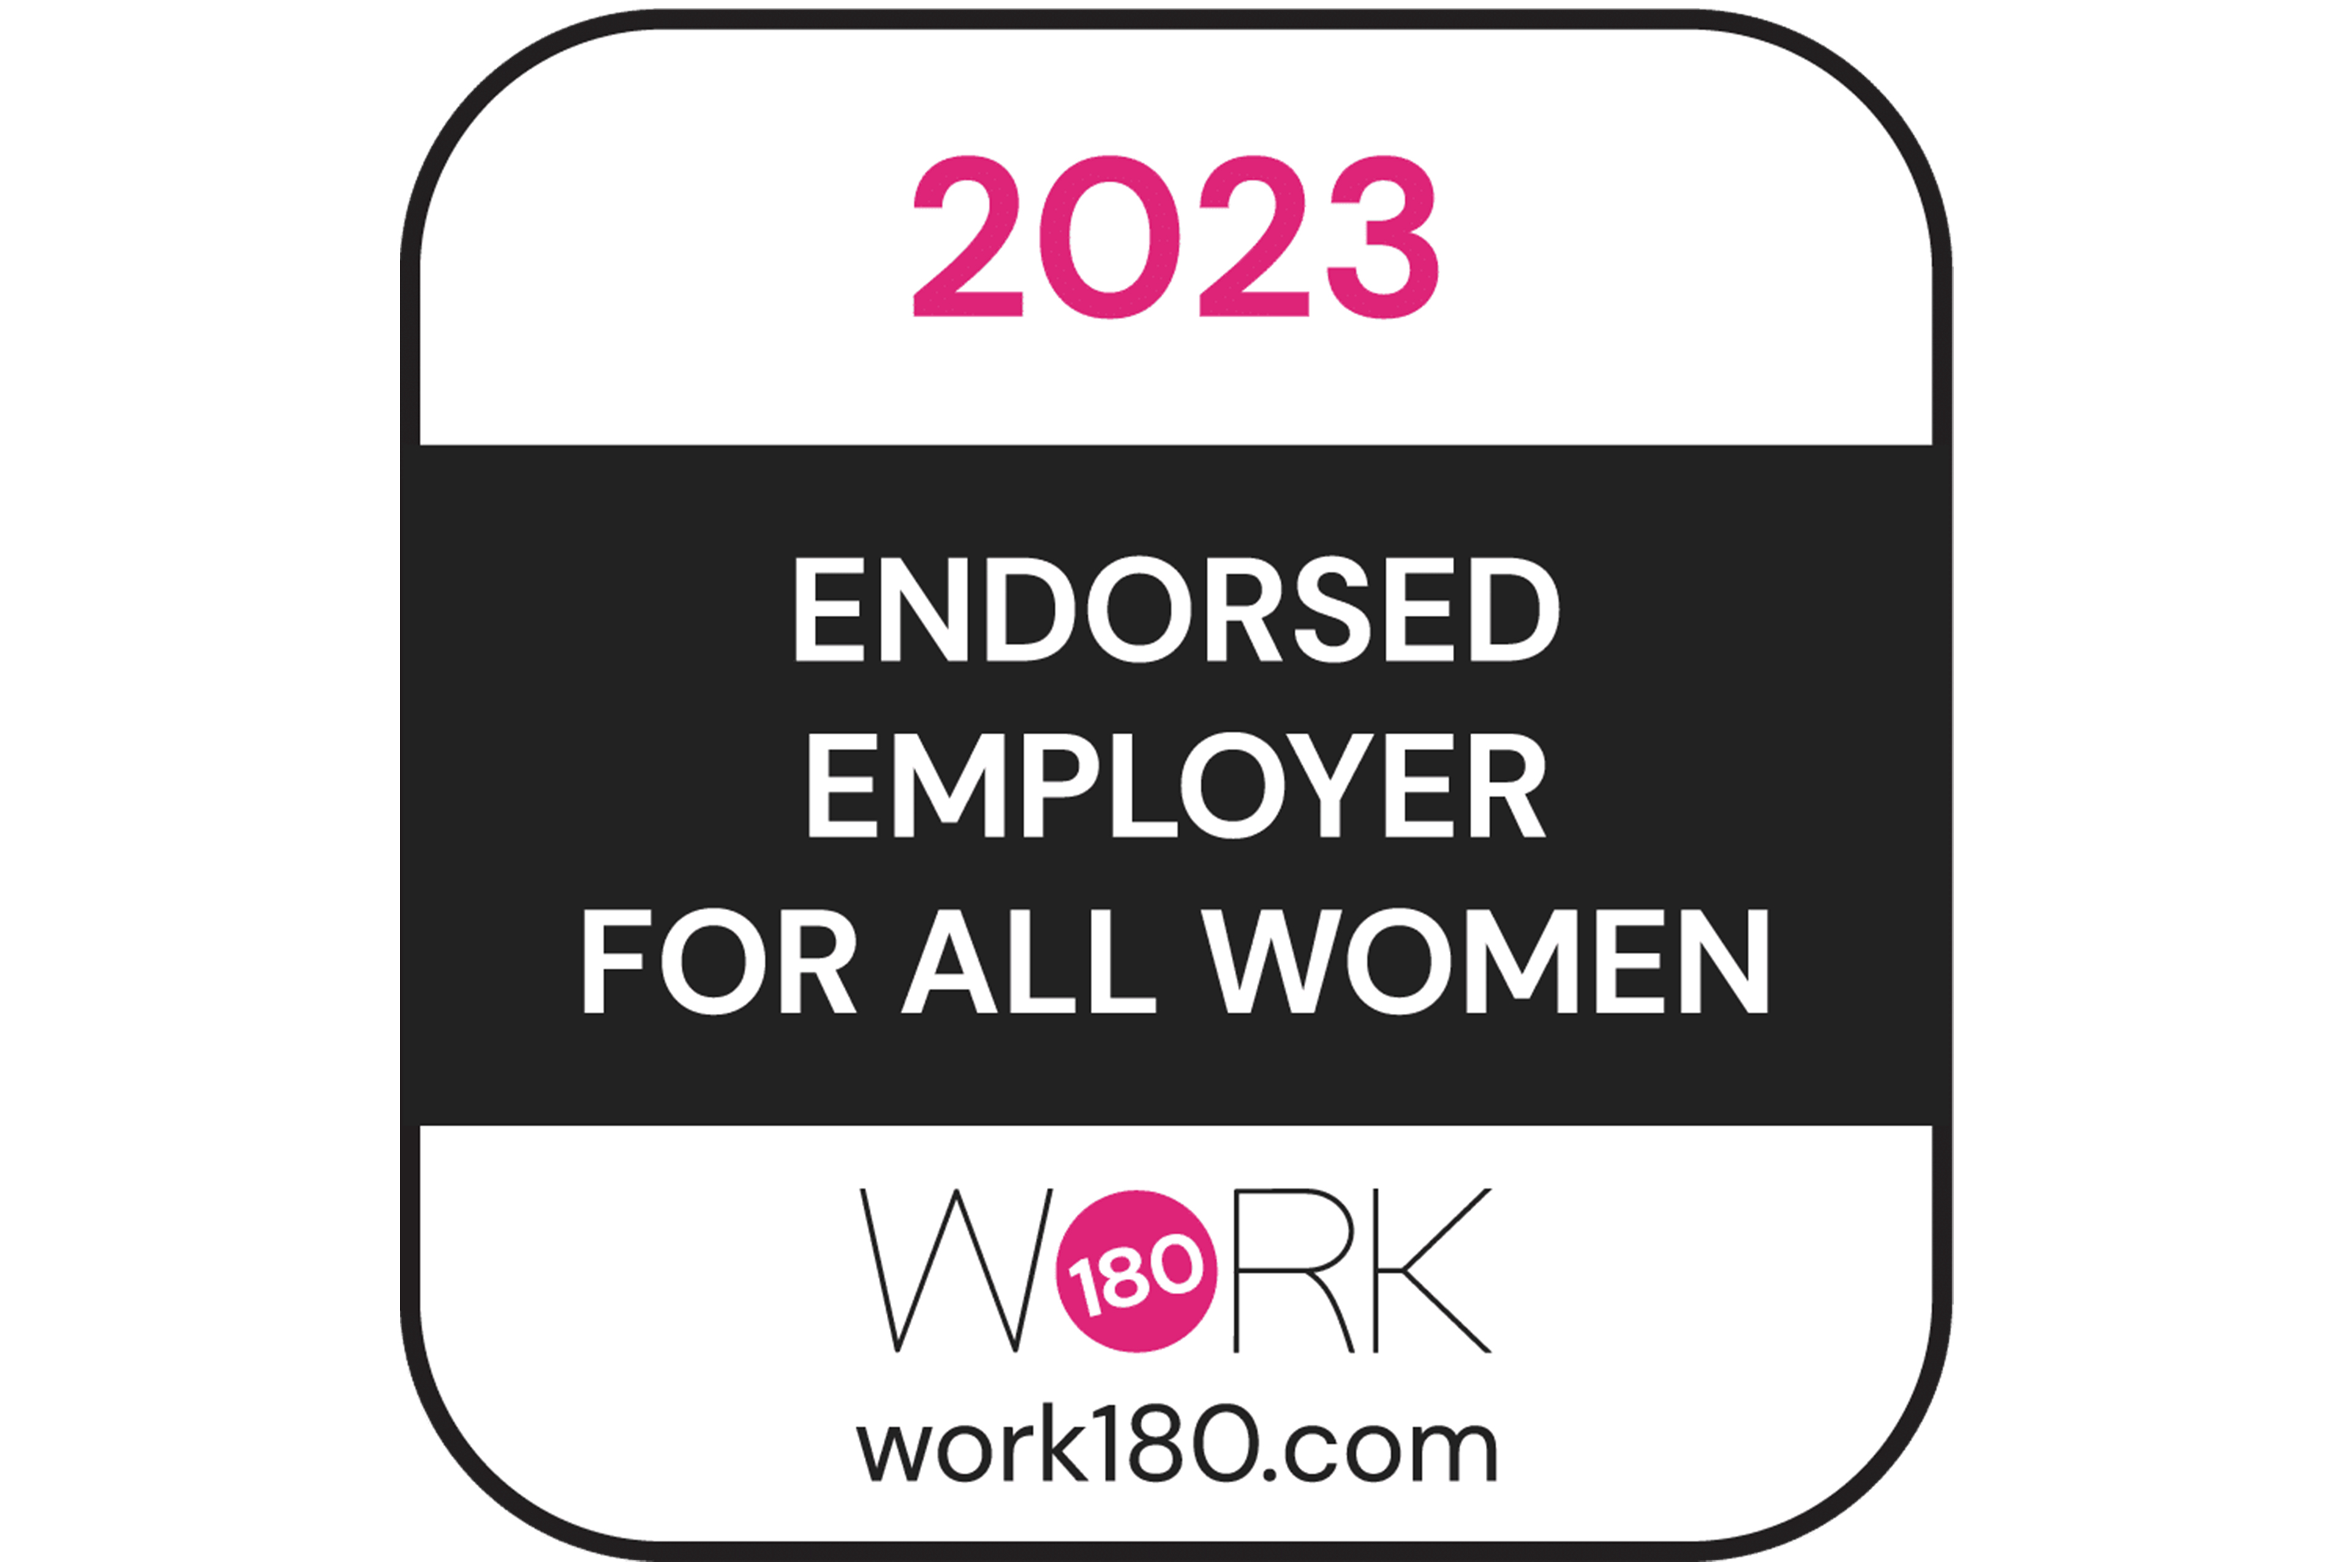 Endorsed employer for all women 2023